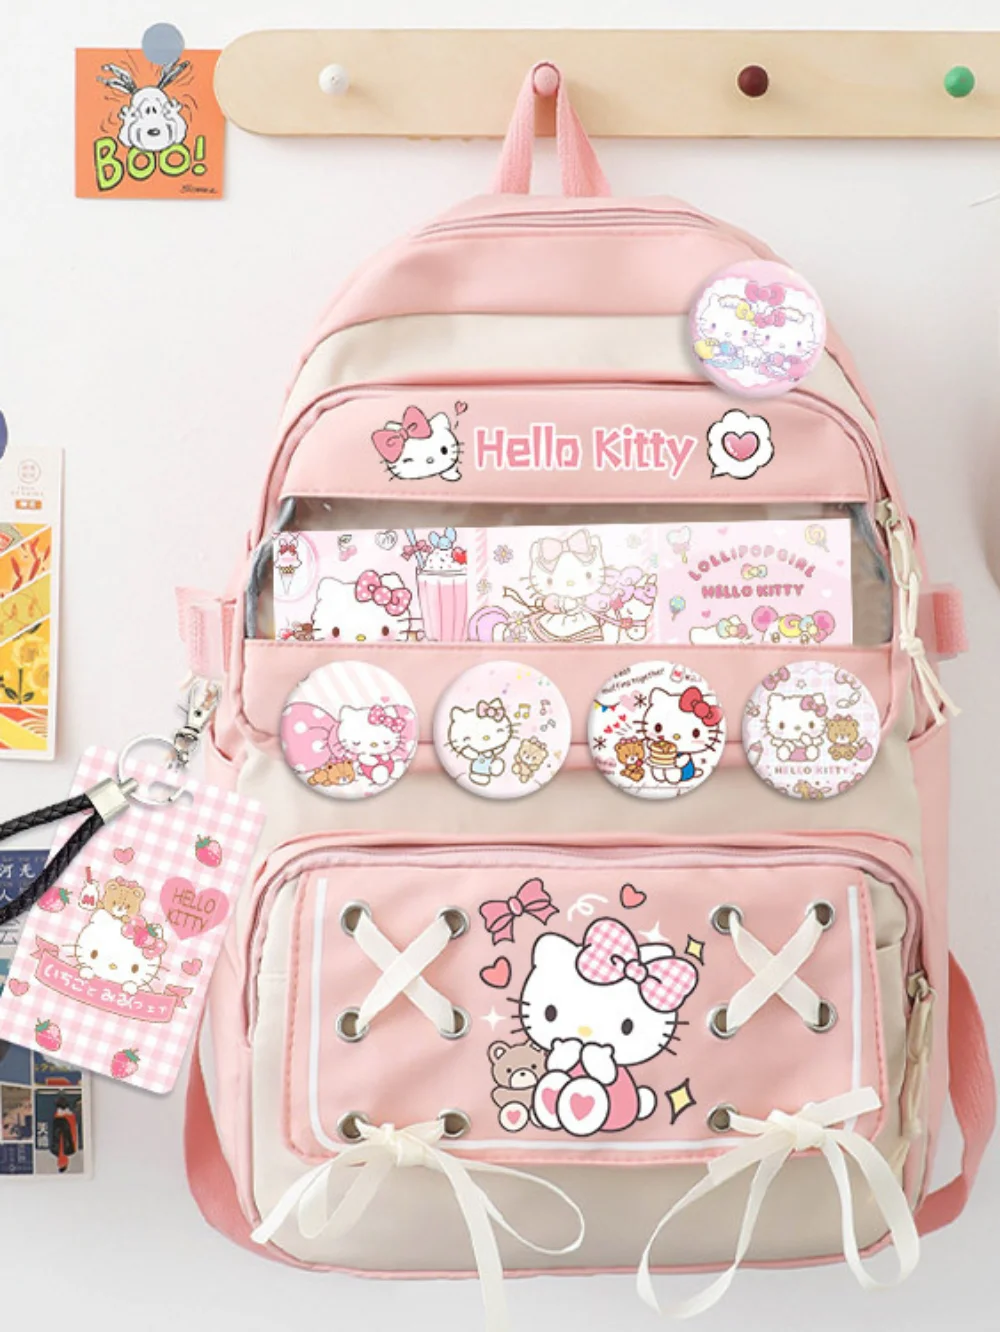 Wholesale Hello Kitty 2 Pocket Backpack- 16 PINK/LIGHT BLUE